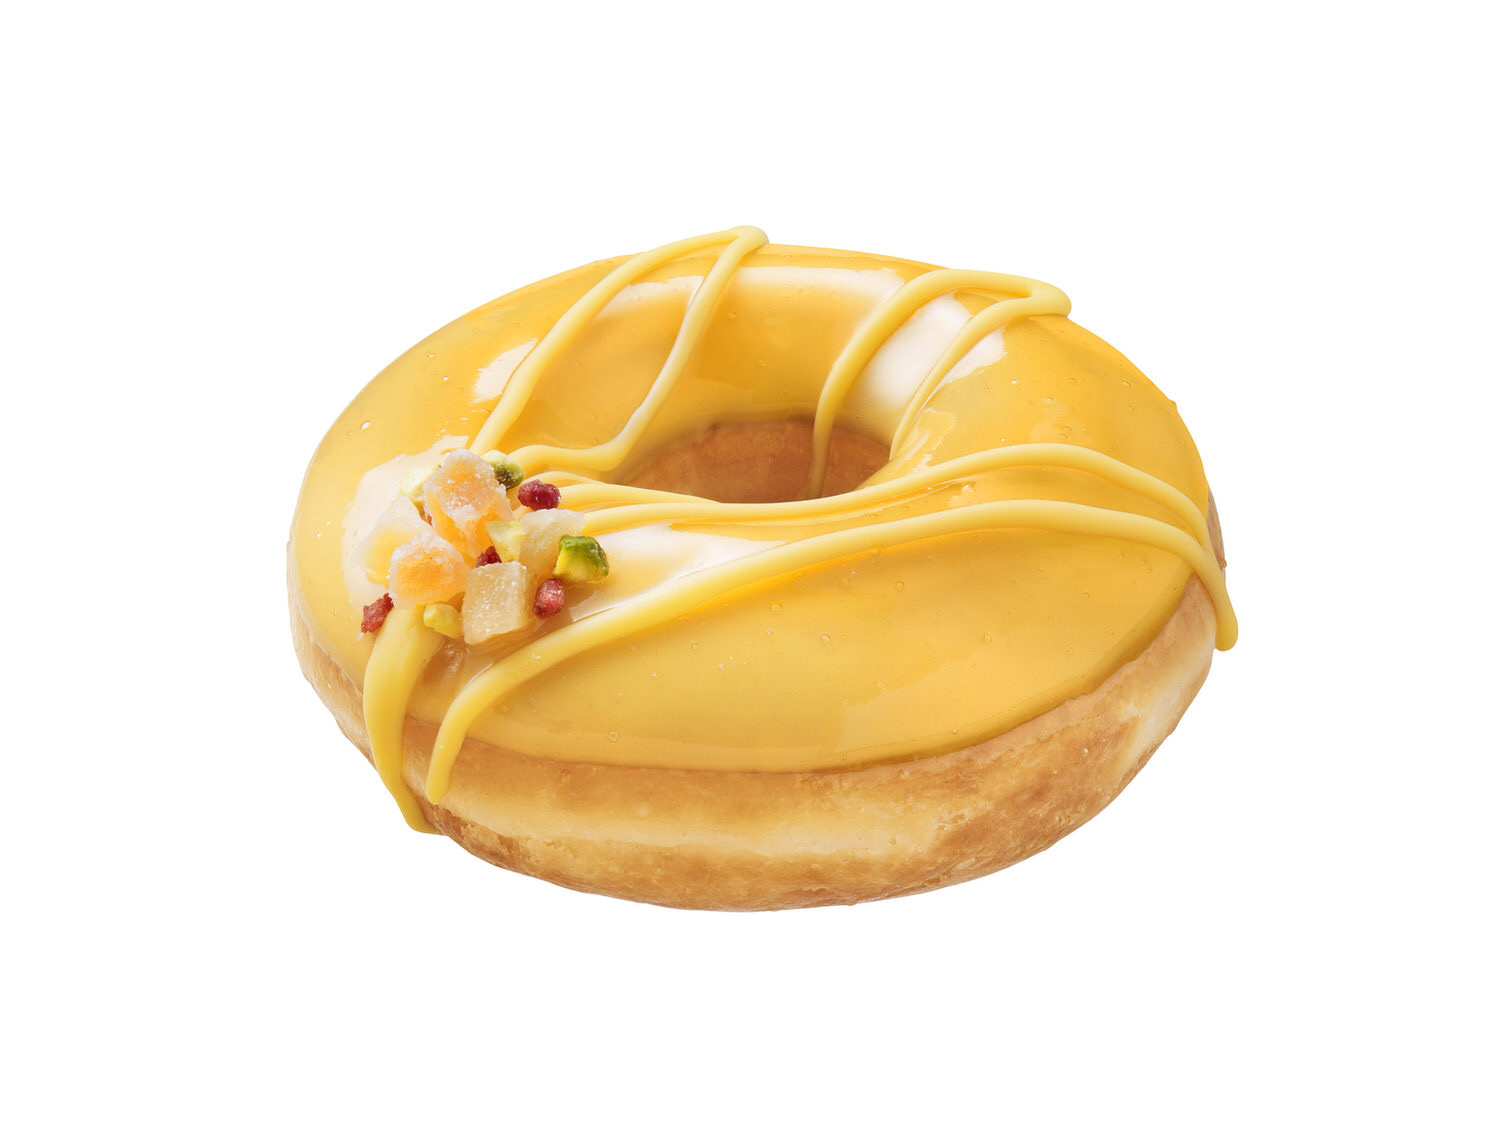 Cryspy cream donuts 18003